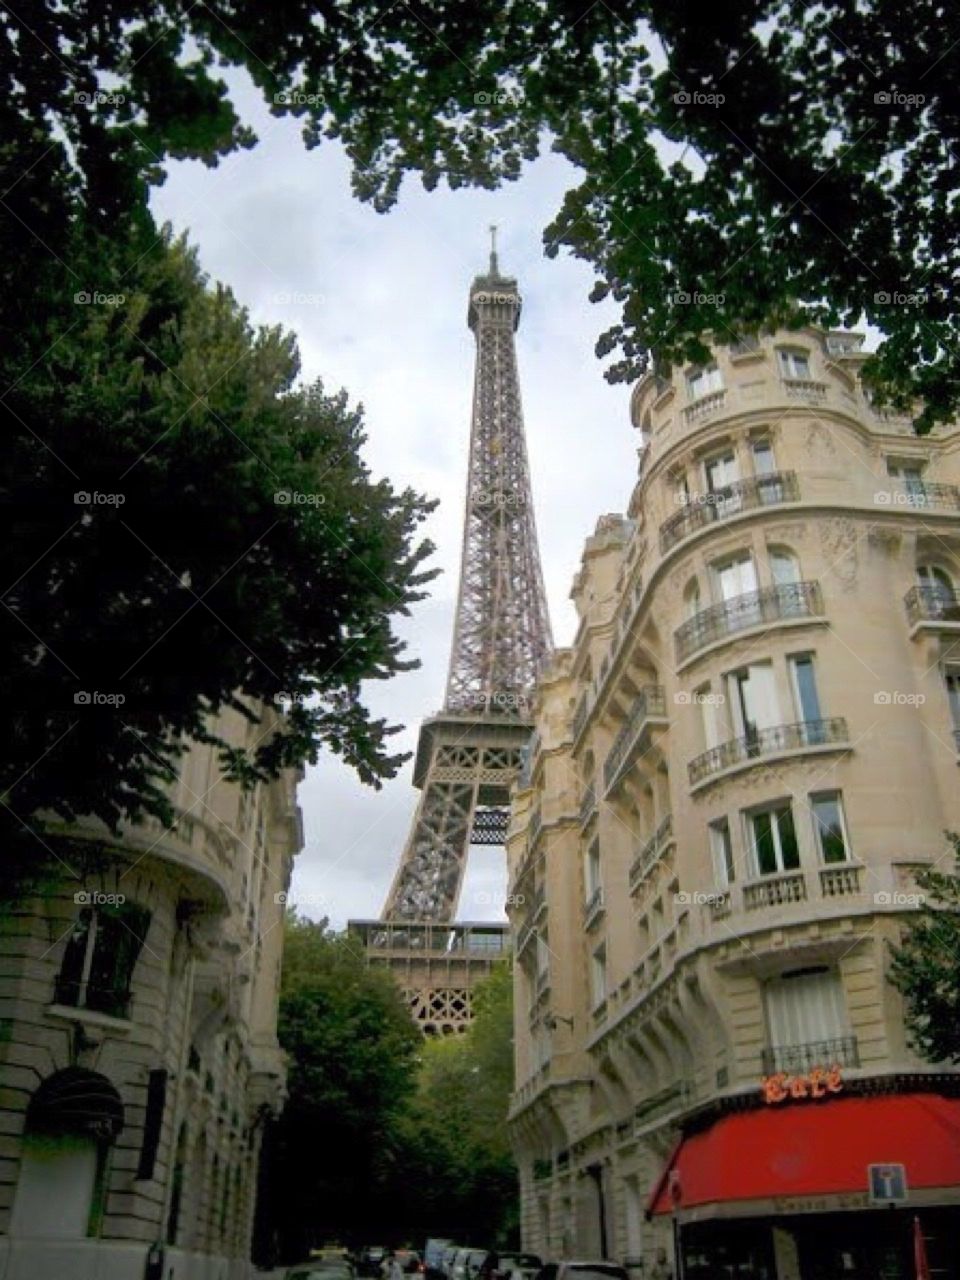 Eiffel Tower behind buildings and trees. Paris France. Europe.